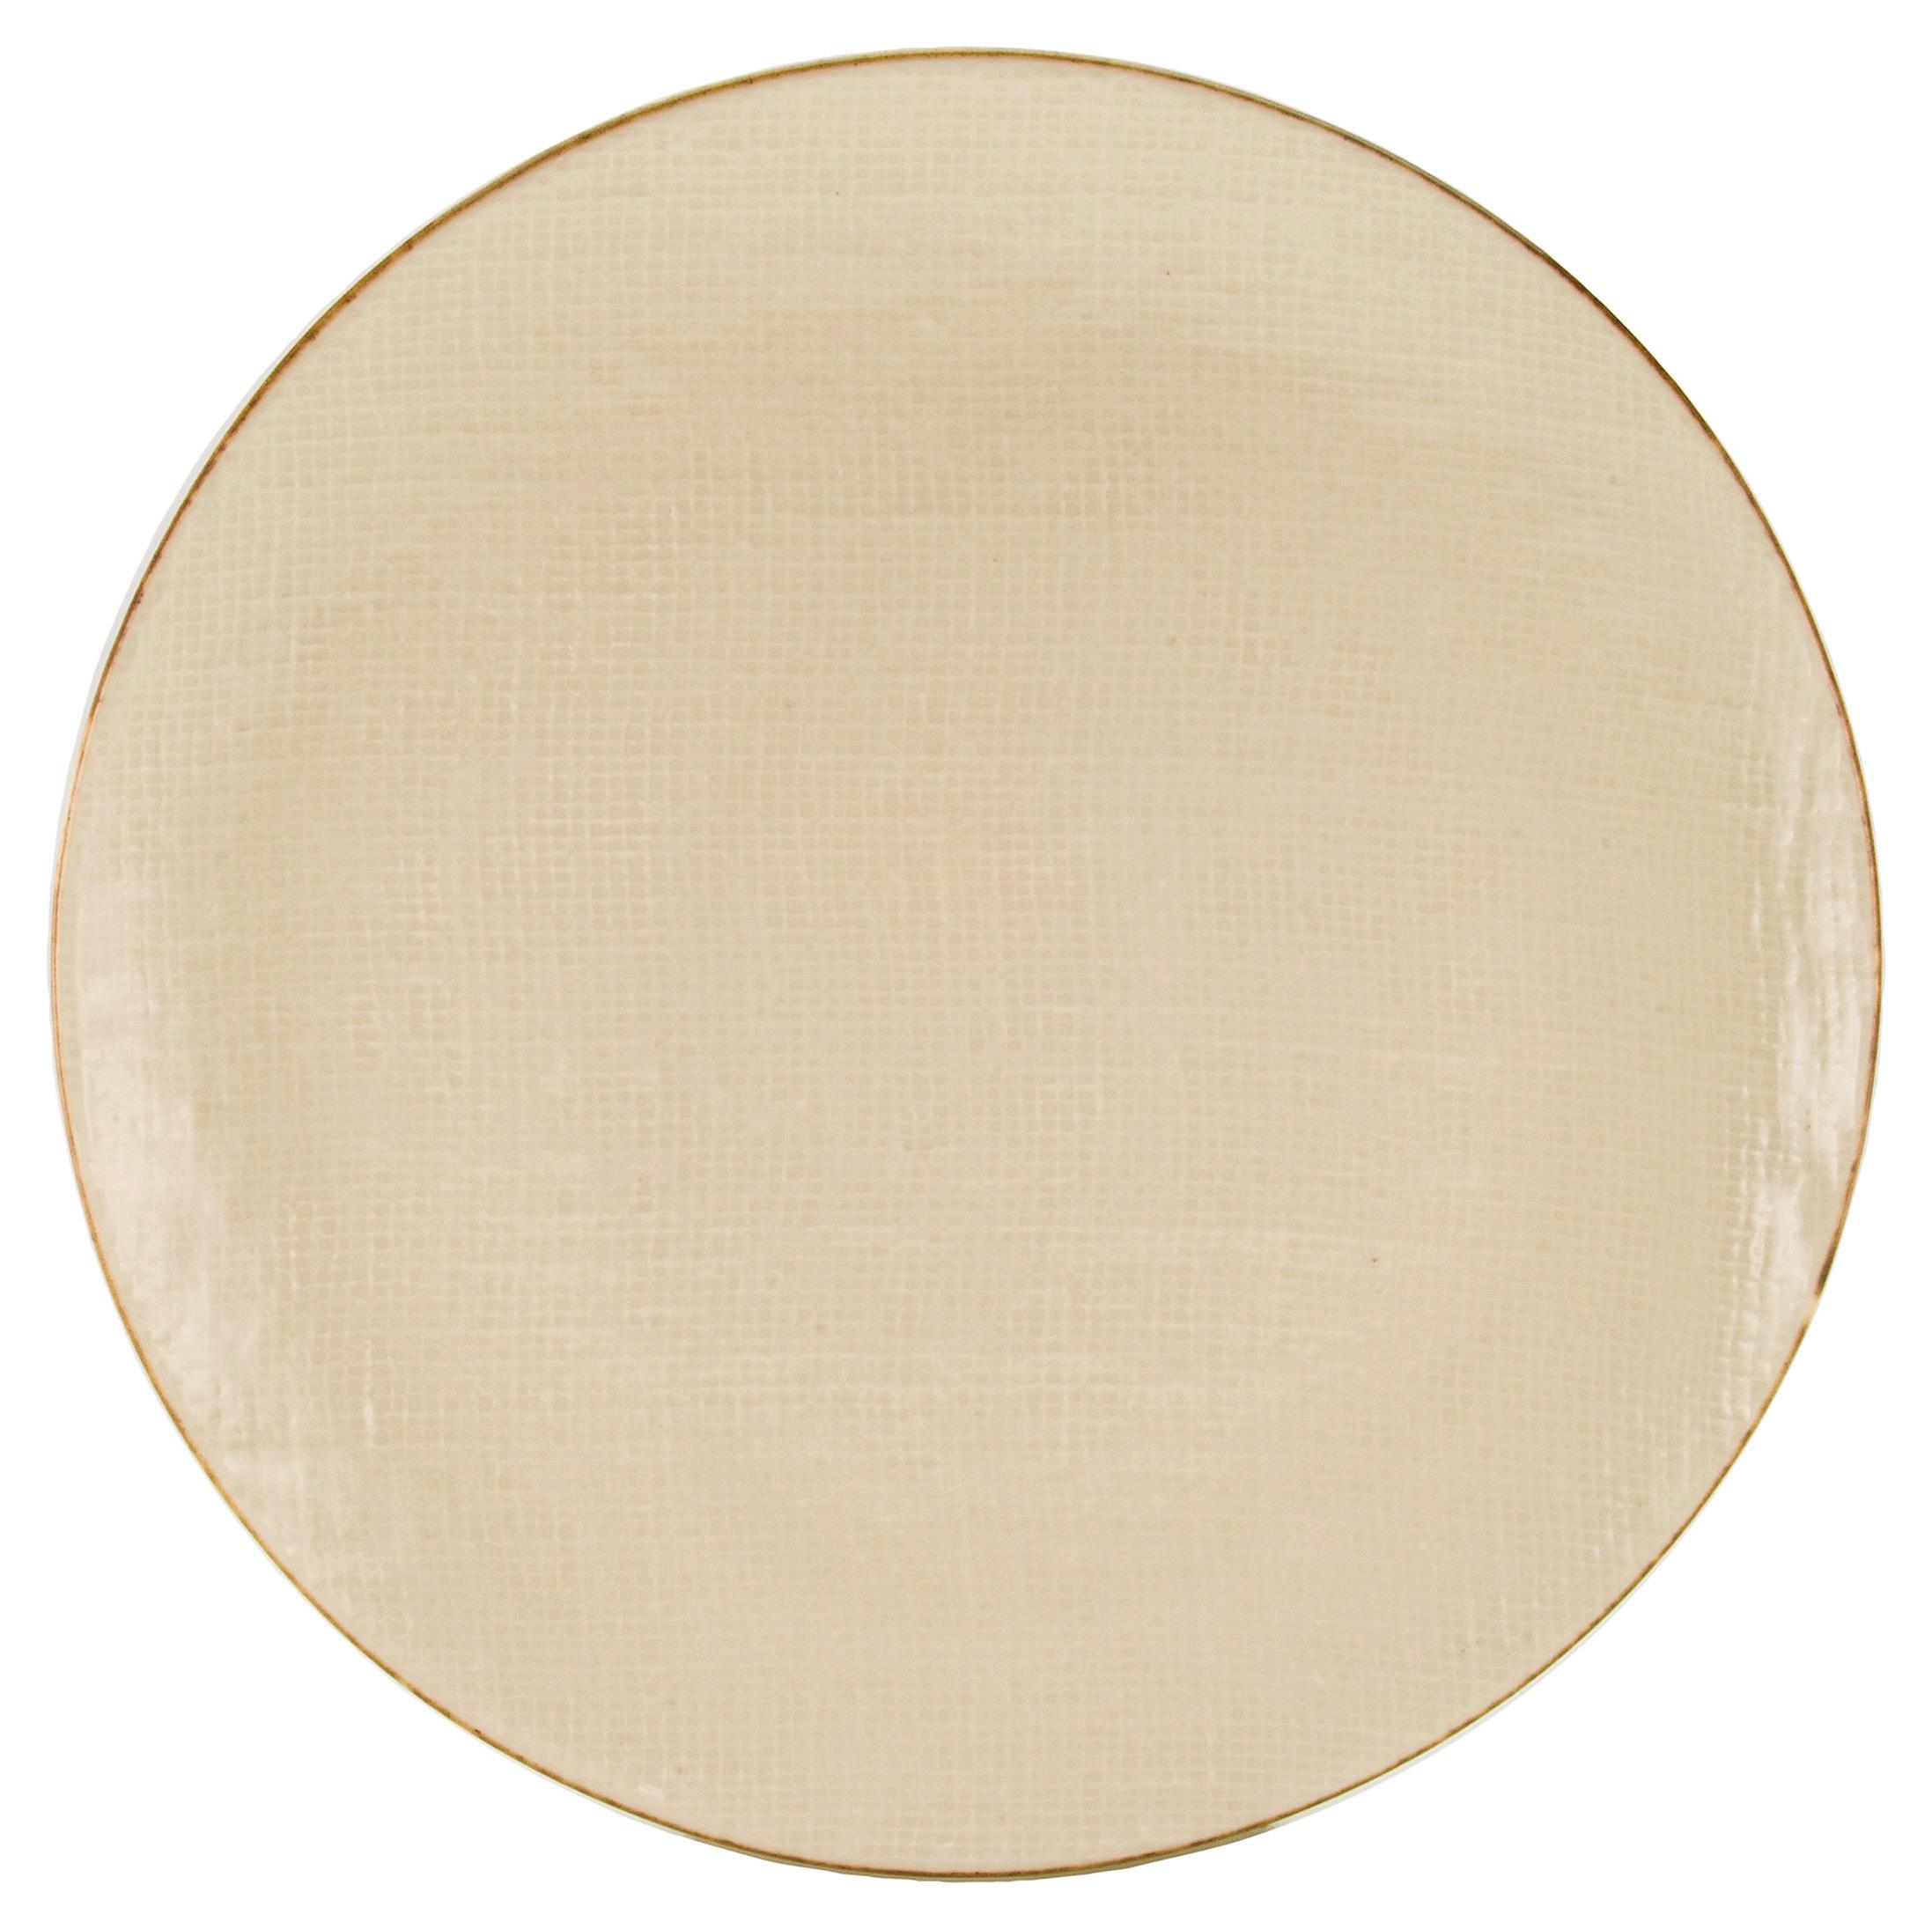 Dezertný Tanier Canvas, Ø: 22cm, Krémová - biela/krémová, keramika (22/22/2,5cm) - Premium Living